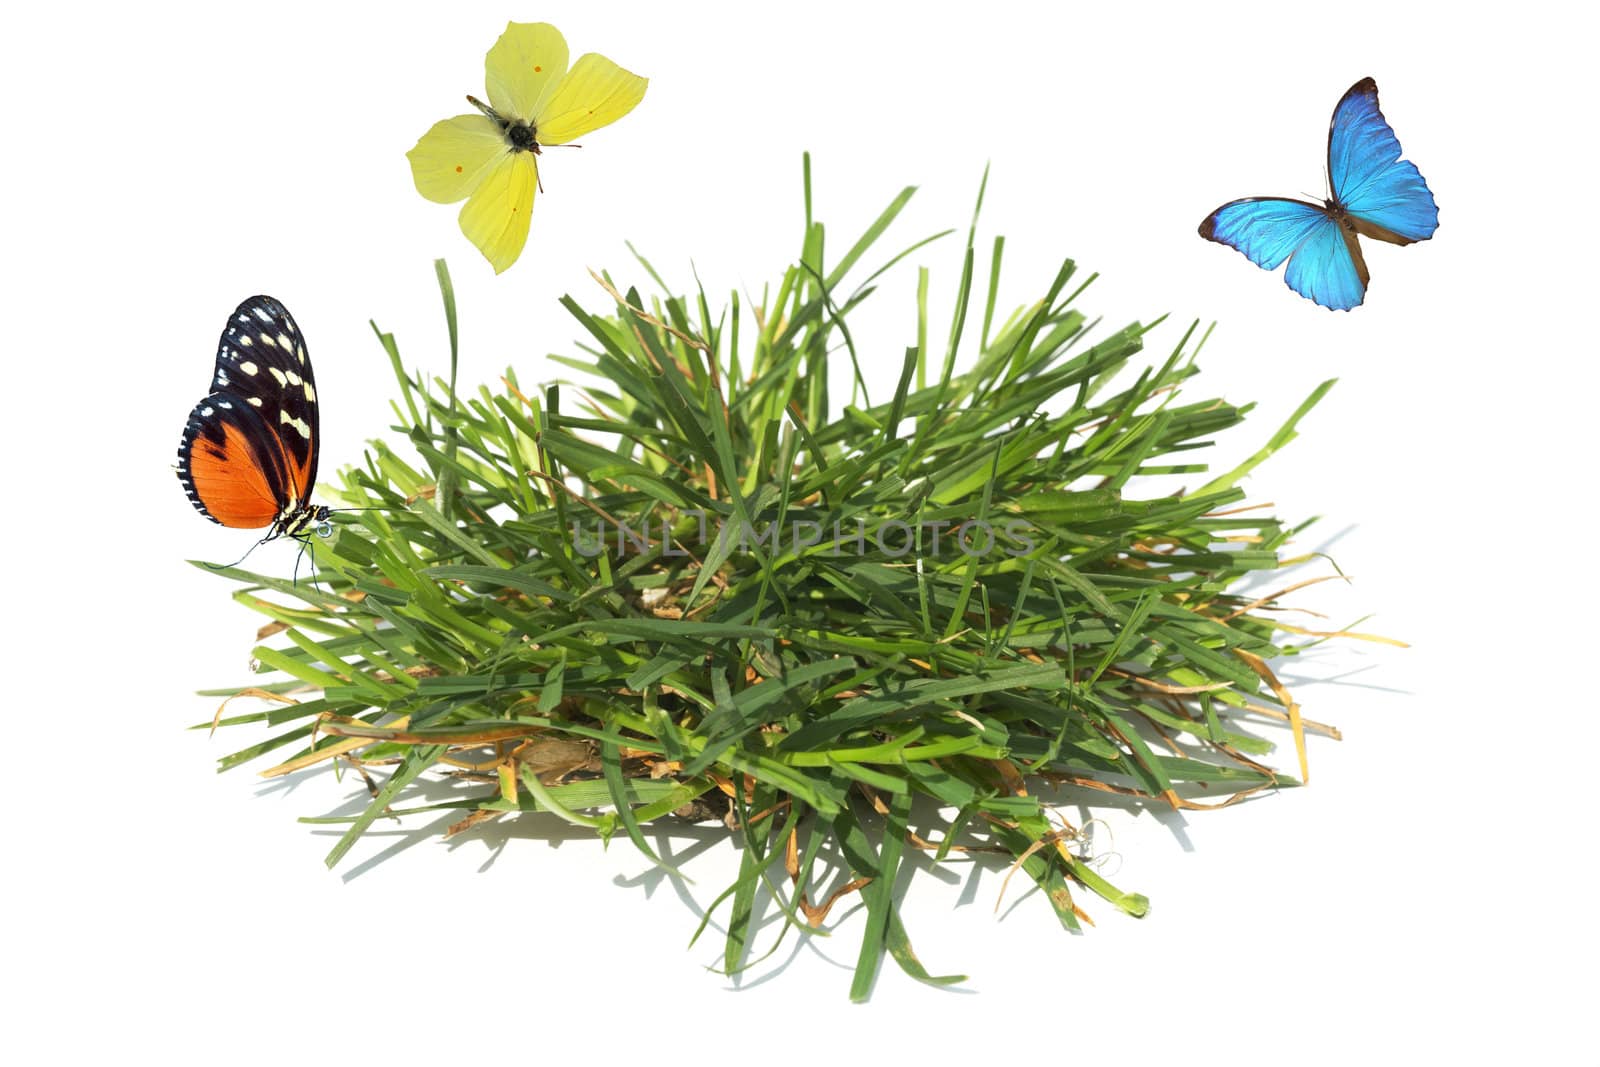 The multicoloured butterflies fly above a green grass